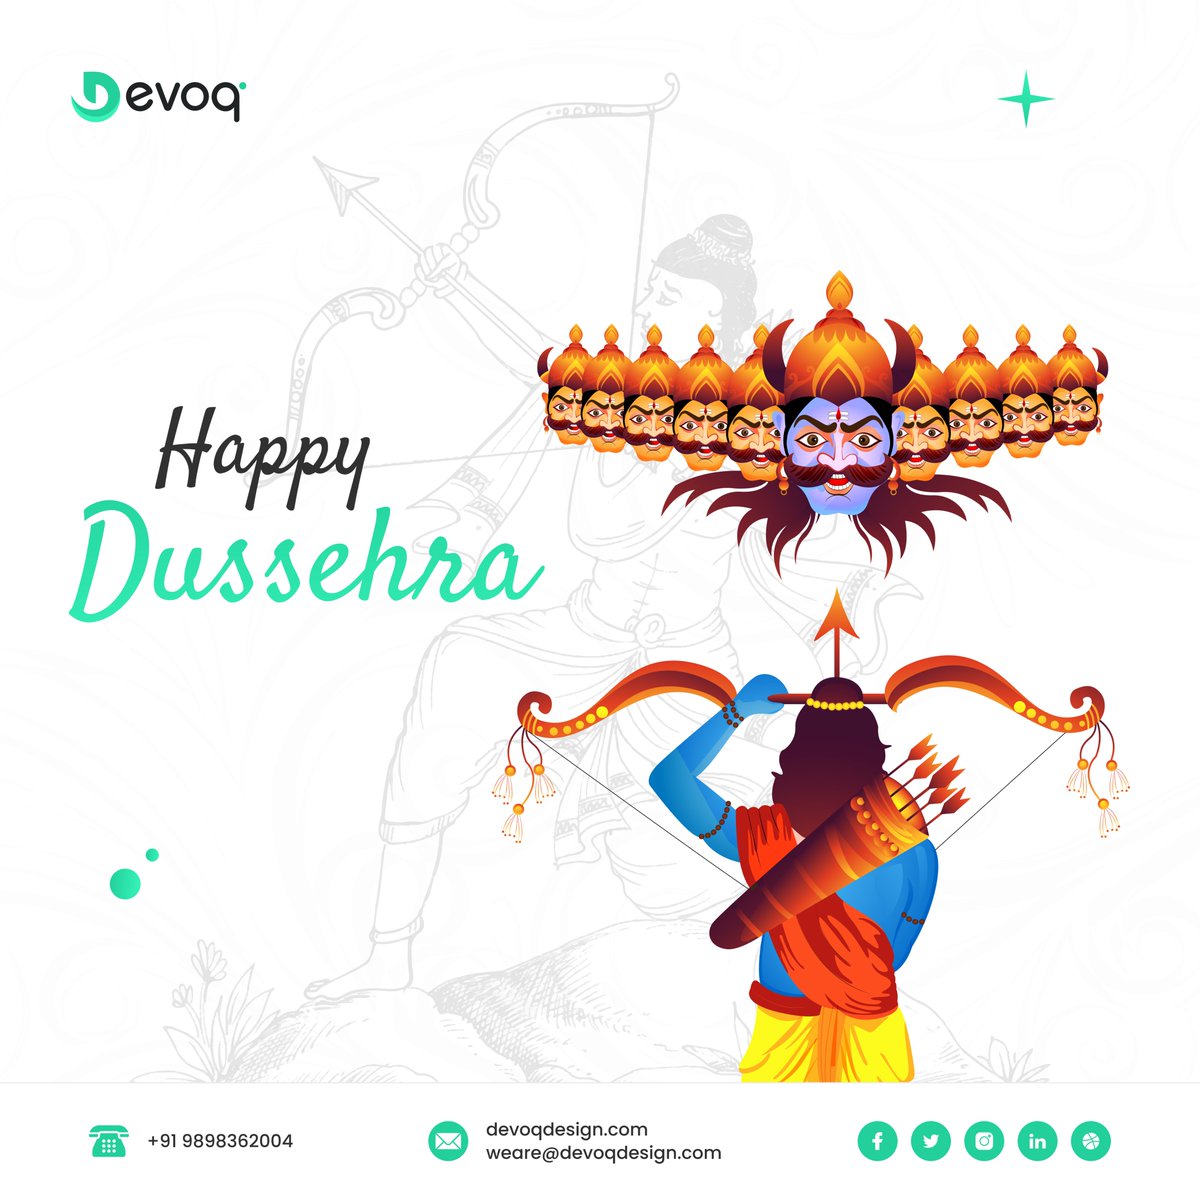 Wishing you a joyful and prosperous Dussehra.

#Dussehra #UserExperience #Design #FestivalOfVictory #UIUXDesign #Celebration #Devoq #DevoqDesign